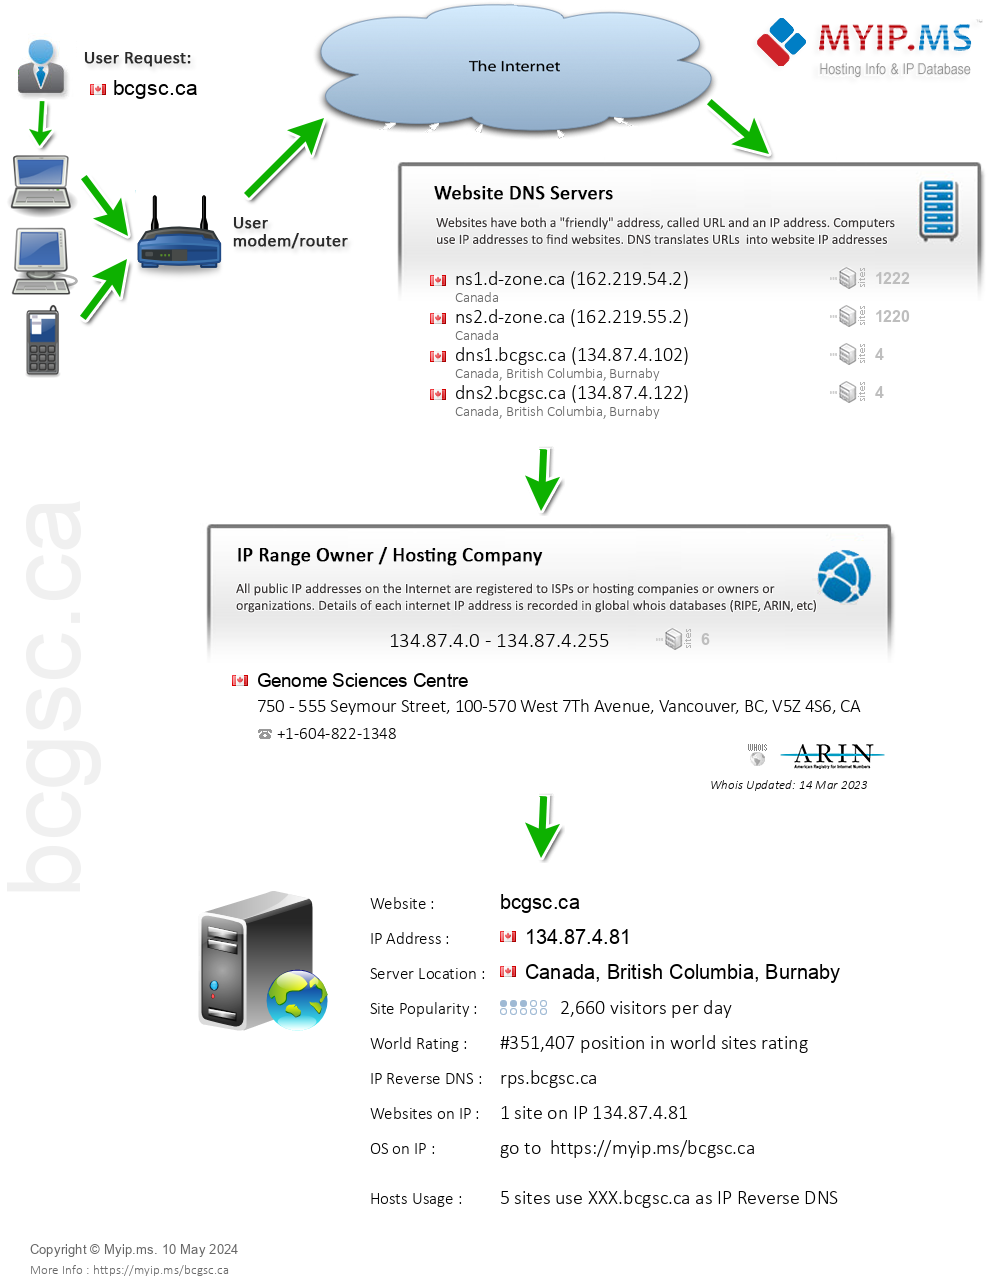 Bcgsc.ca - Website Hosting Visual IP Diagram